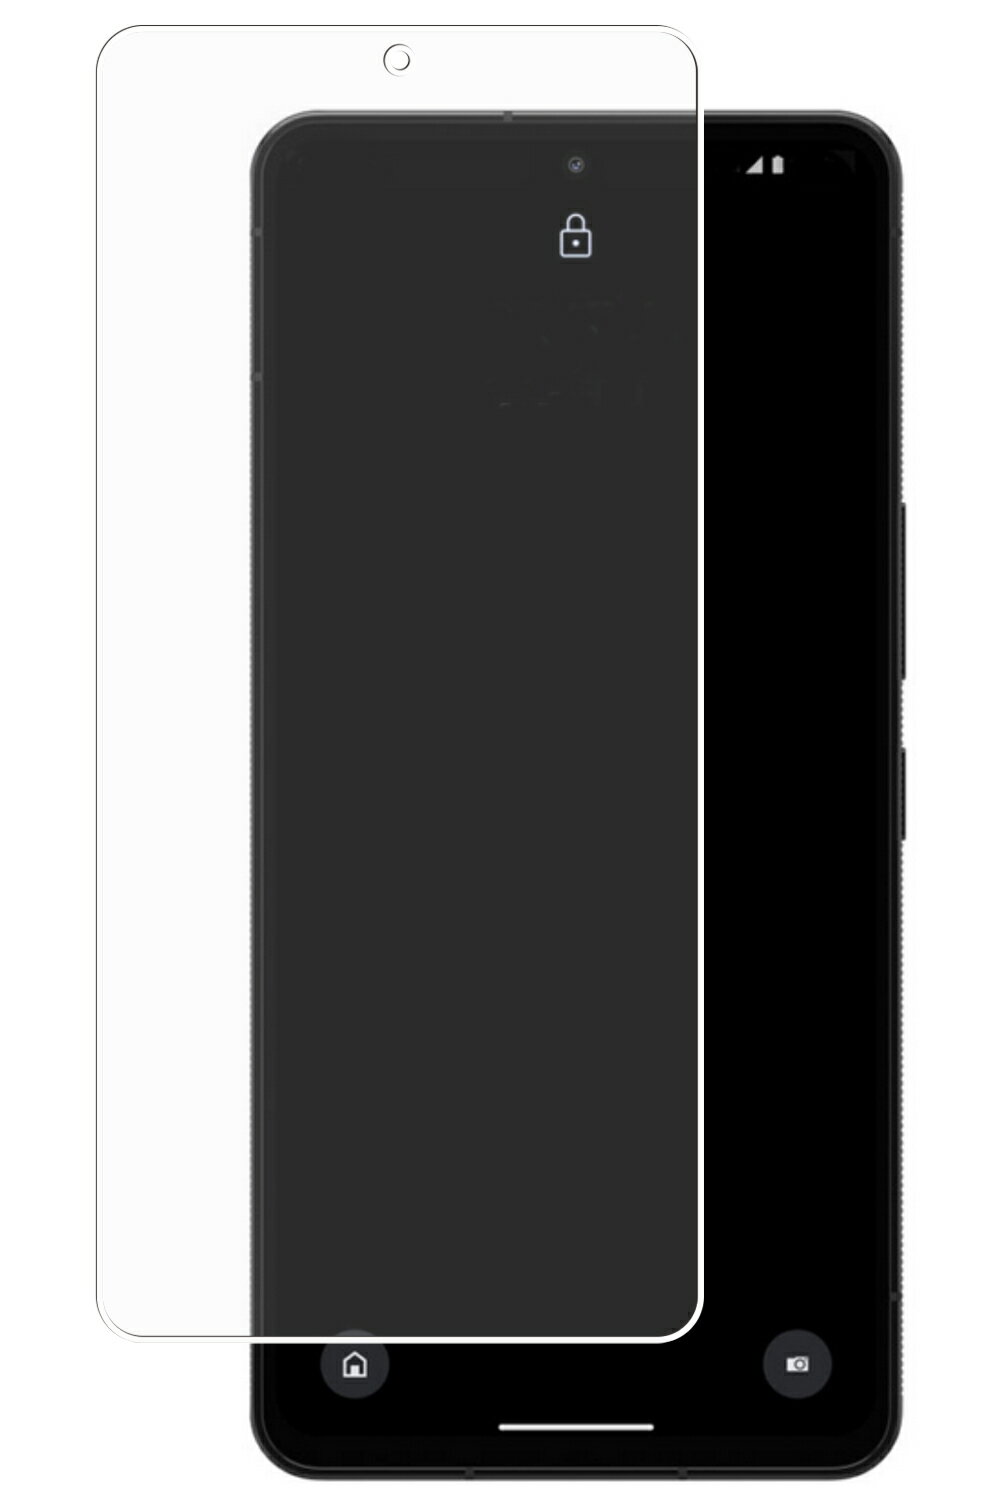 Leica Leitz Phone 3 SoftBank p dx 9H A`OA ^Cv t ی tB   KXtB Ɠ dx9H CJ Cc tH X[